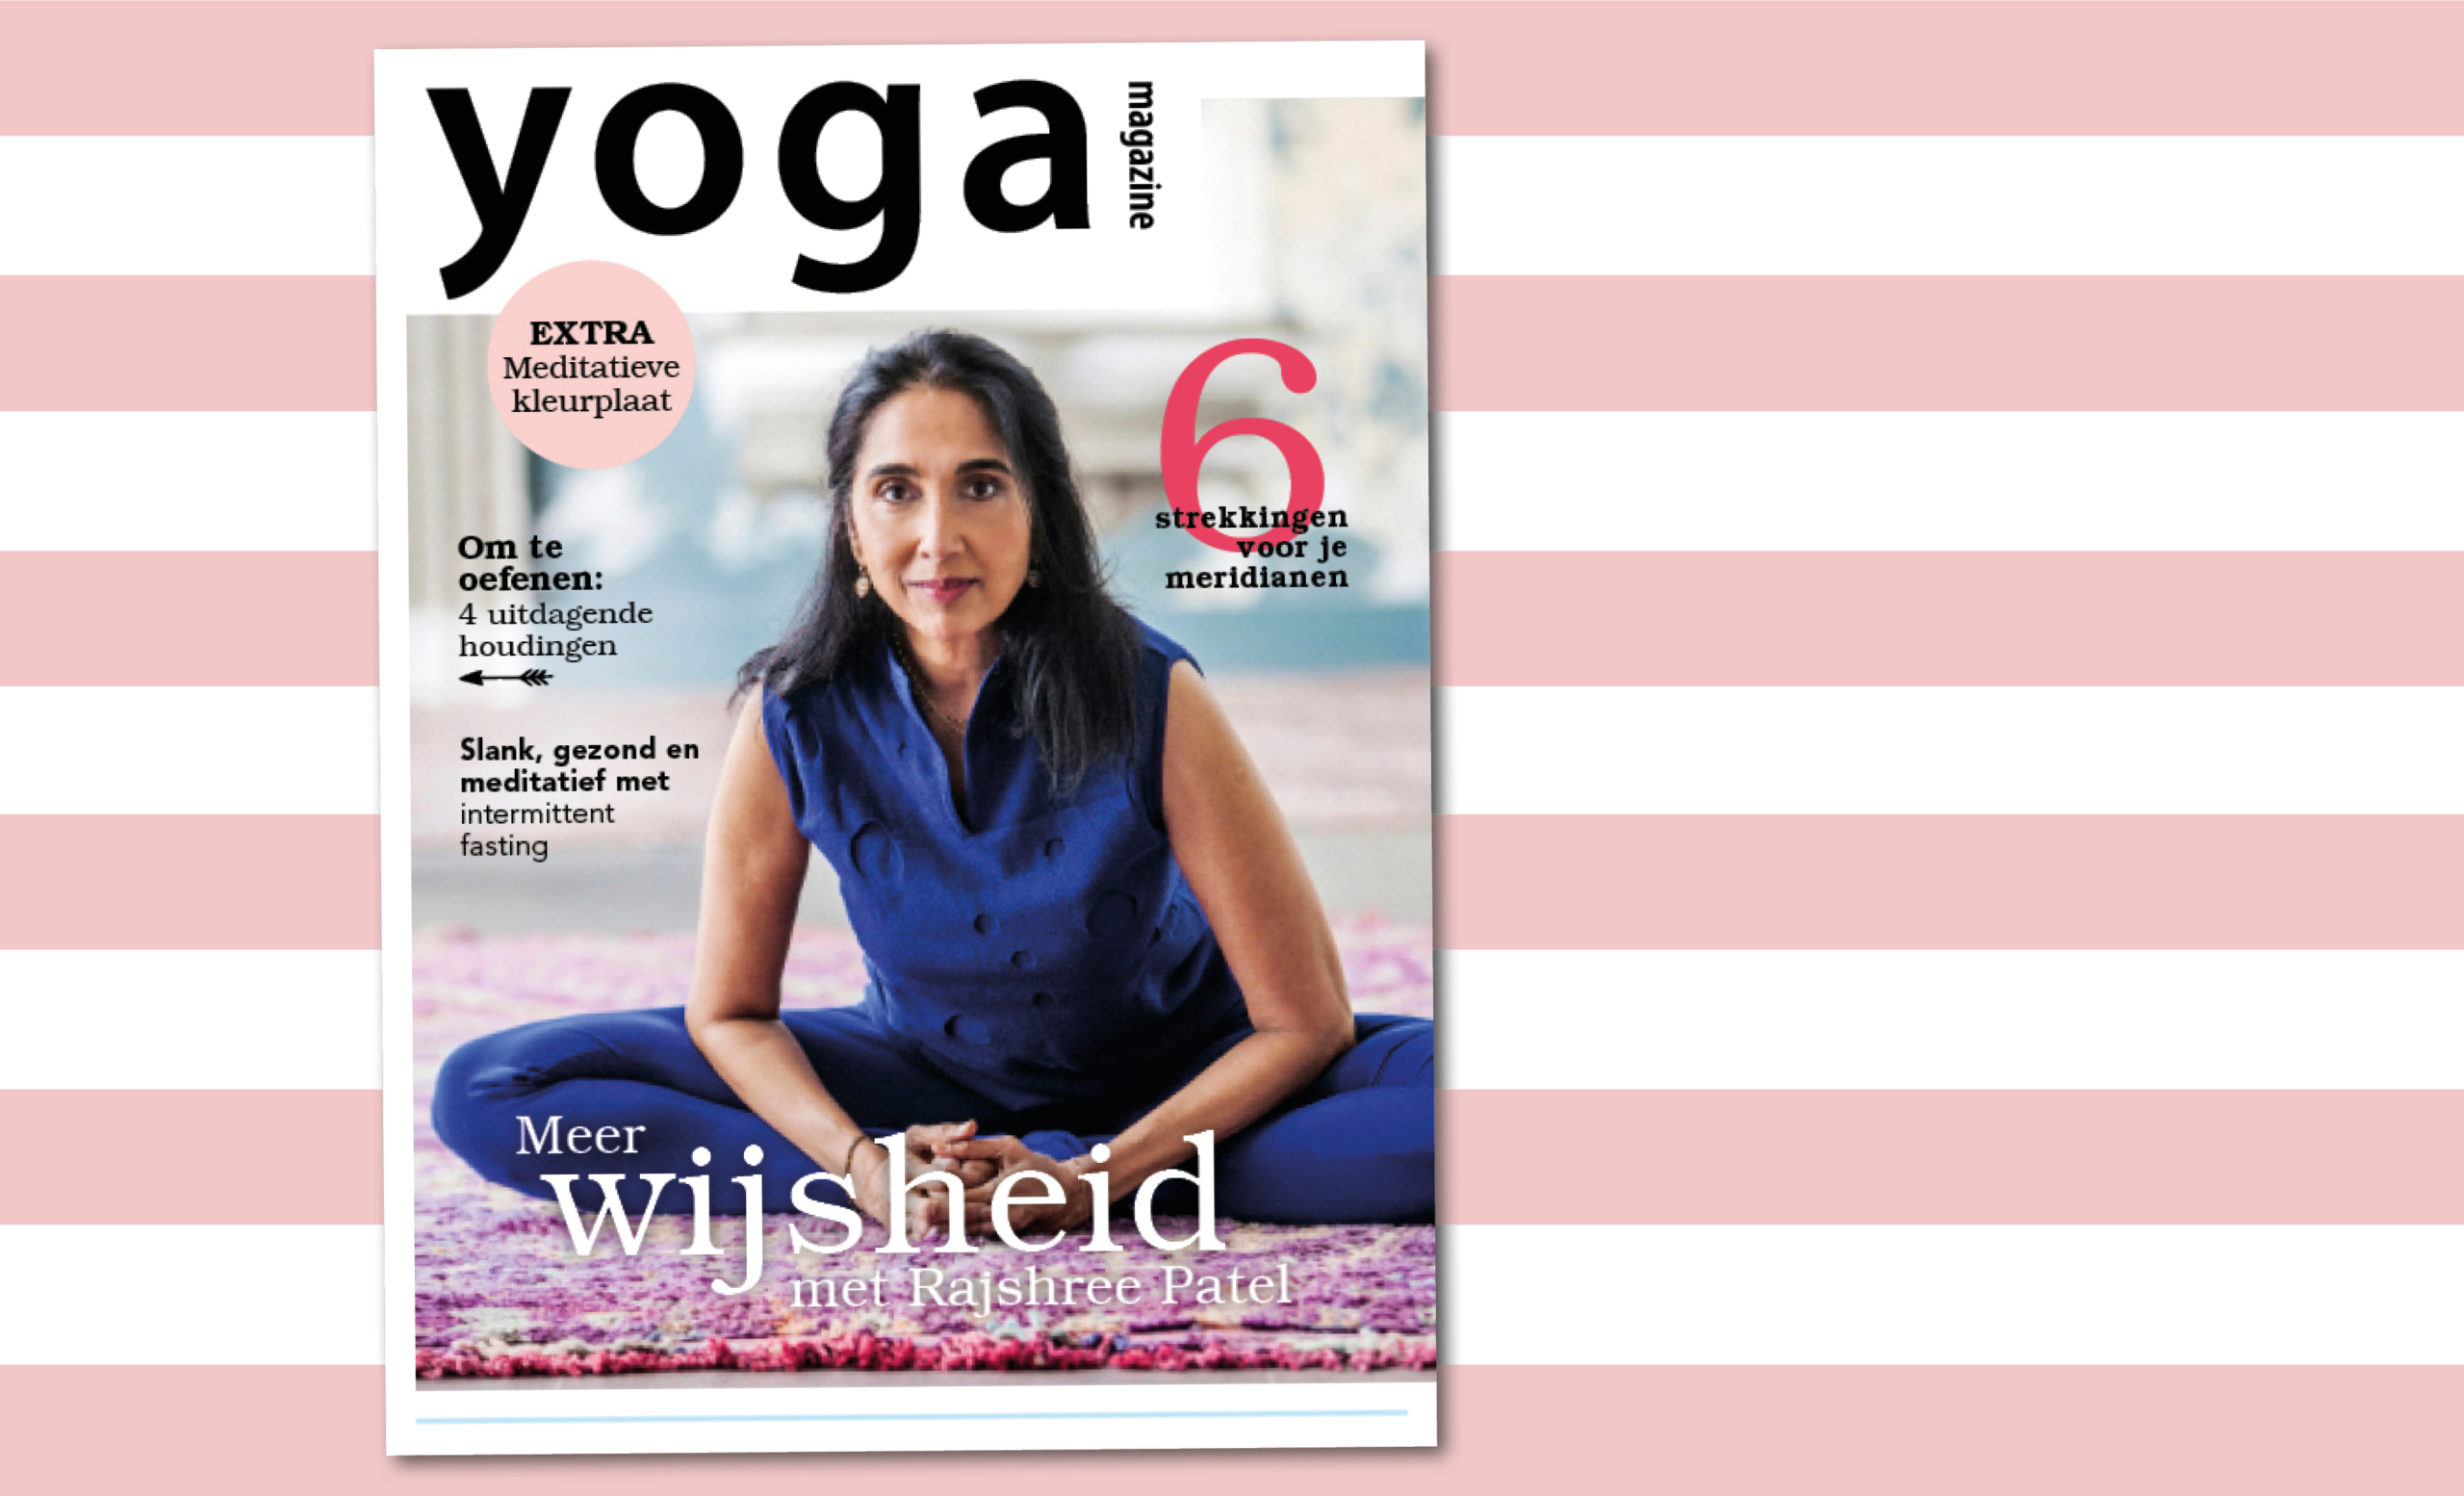 Het nieuwe Yoga magazine is er!